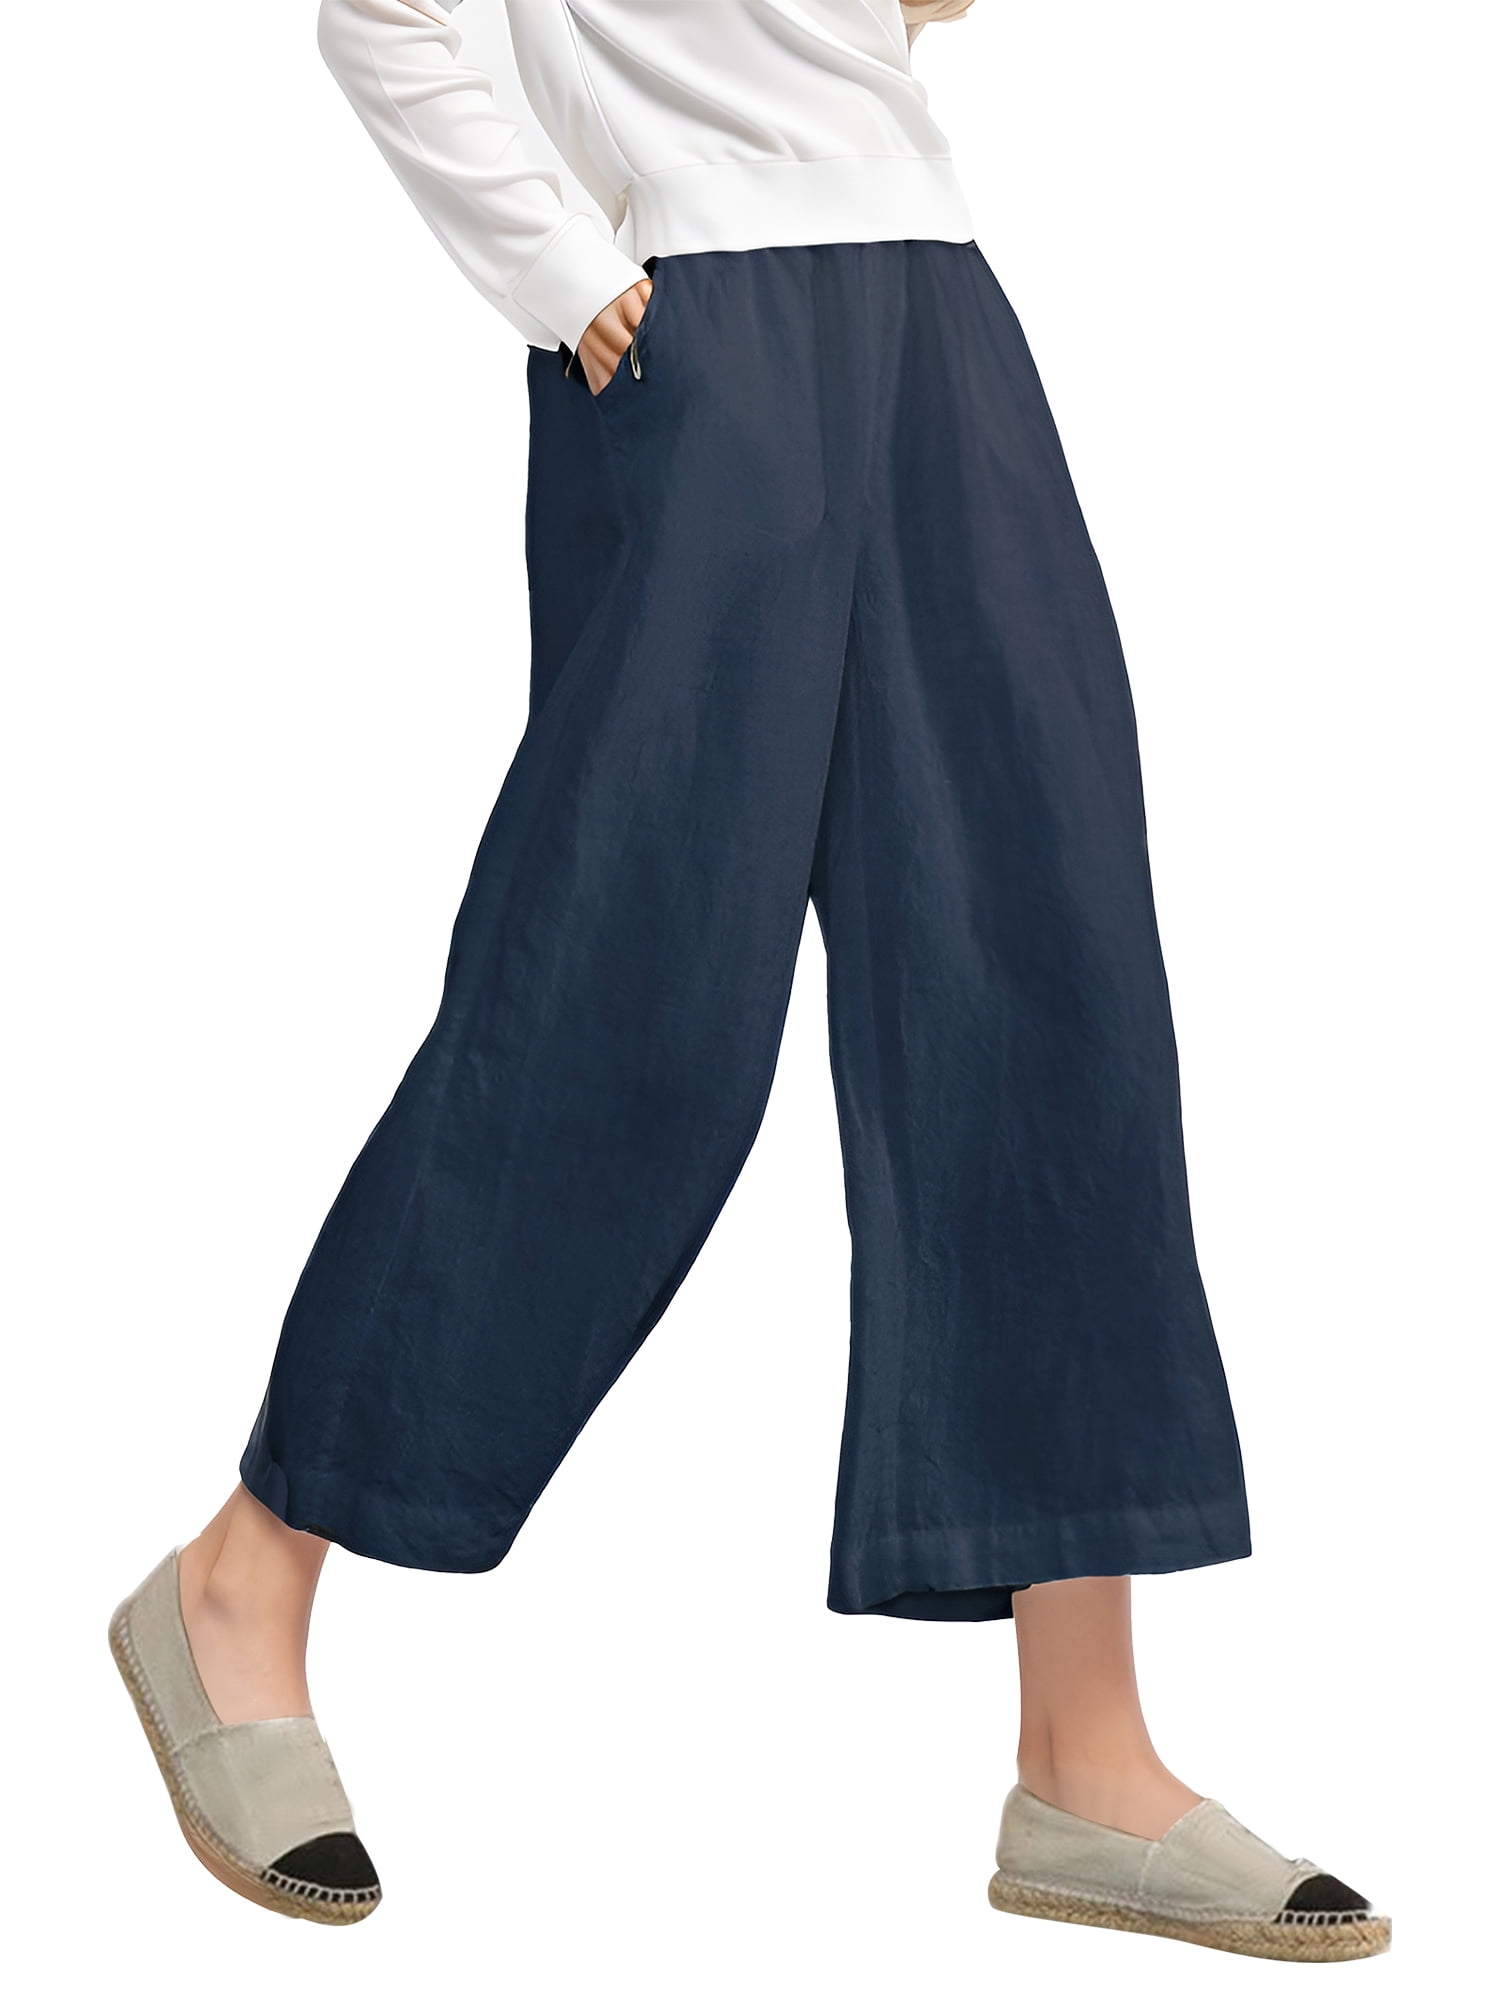 Cargo Pants for Women Lady Elastic High Waist Jogger Pockets